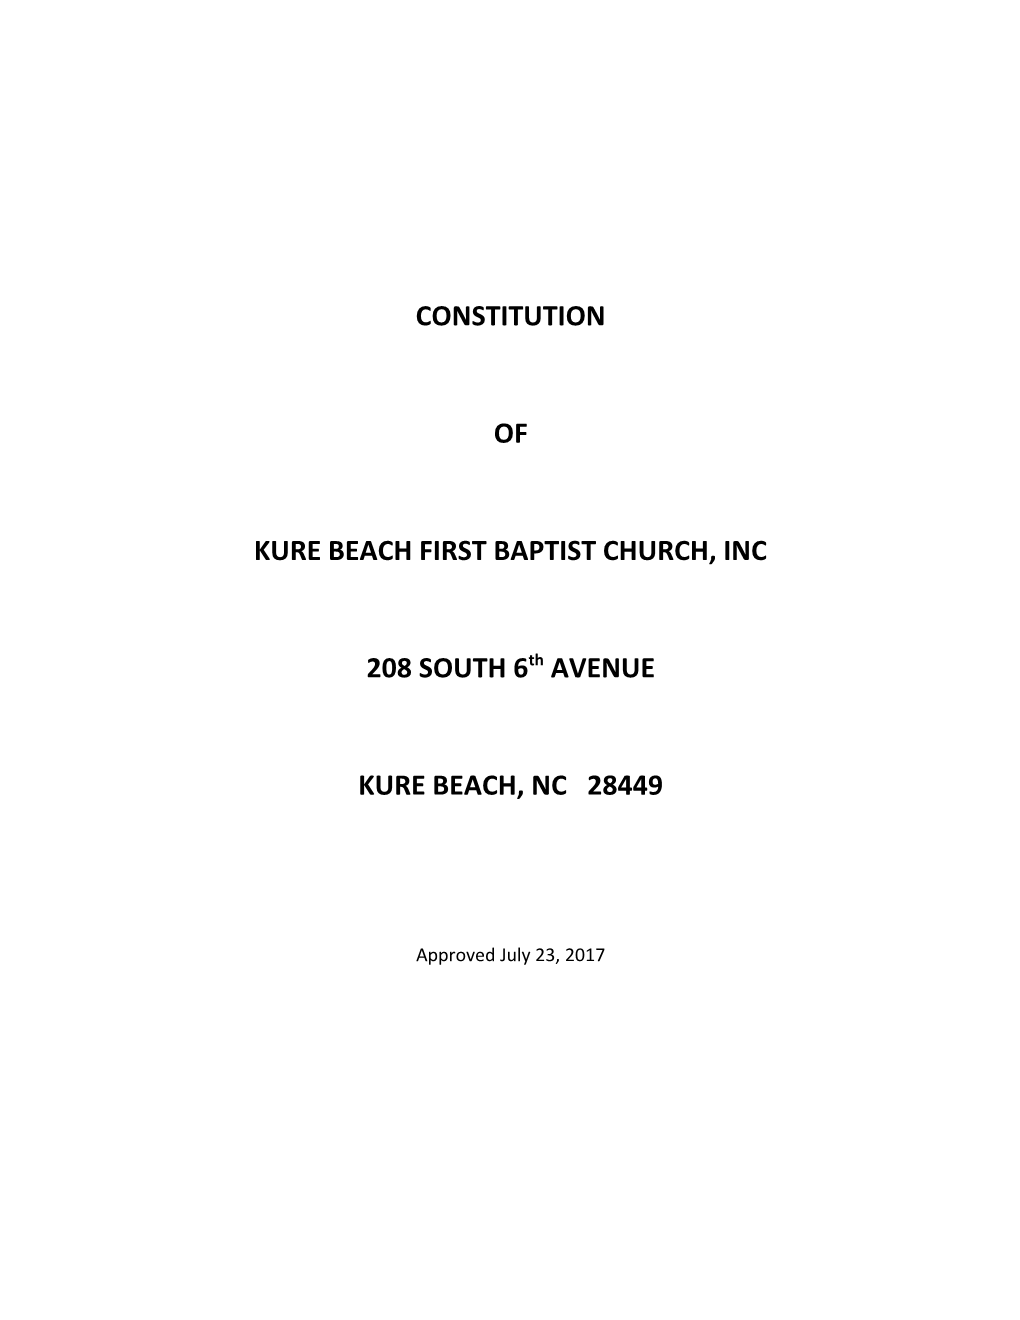 Kure Beach First Baptist Church, Inc